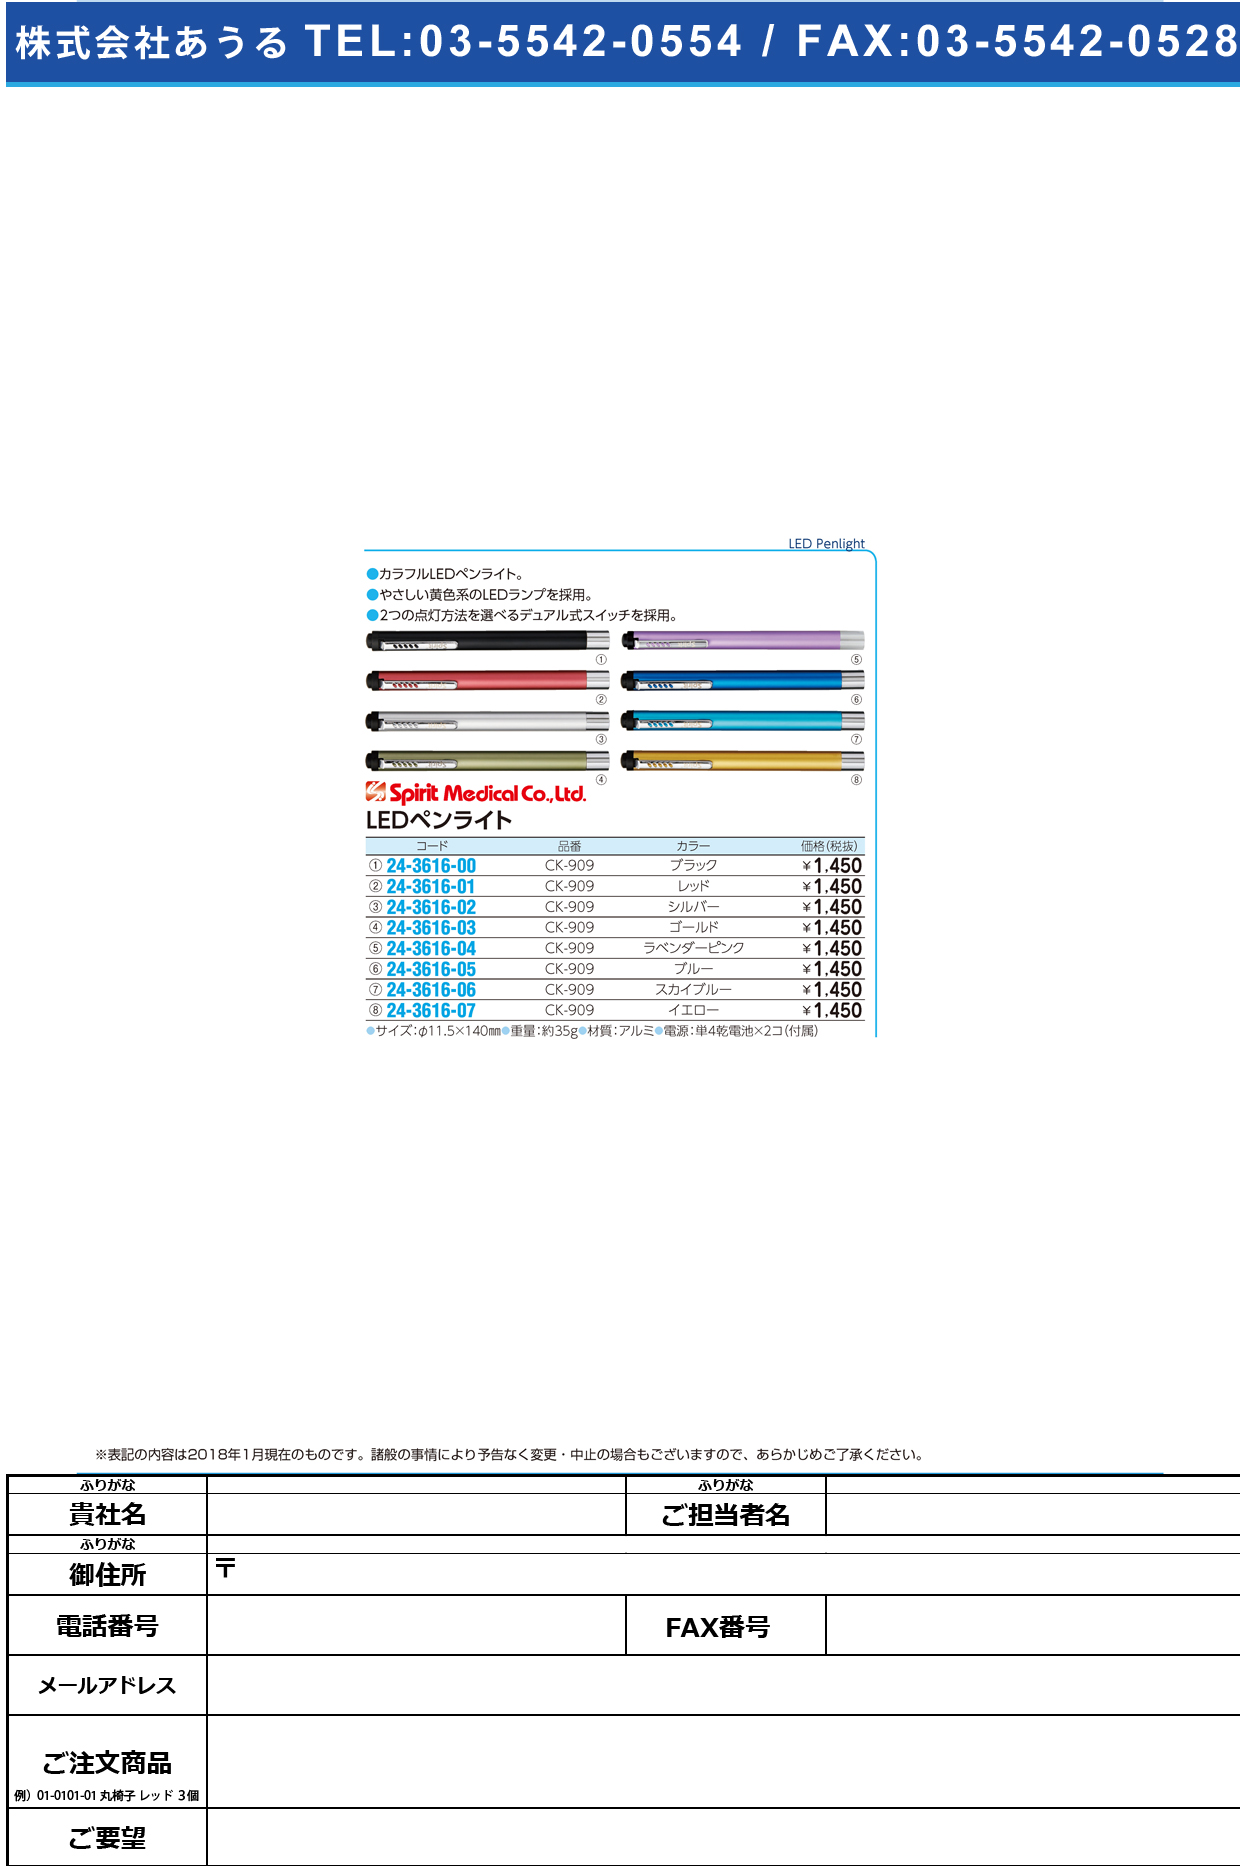 (24-3616-01)ＳｐｉｒｉｔＬＥＤペンライト CK-909(ﾚｯﾄﾞ) SPIRITLEDﾍﾟﾝﾗｲﾄ(スピリット・メディカル社)【1台単位】【2019年カタログ商品】